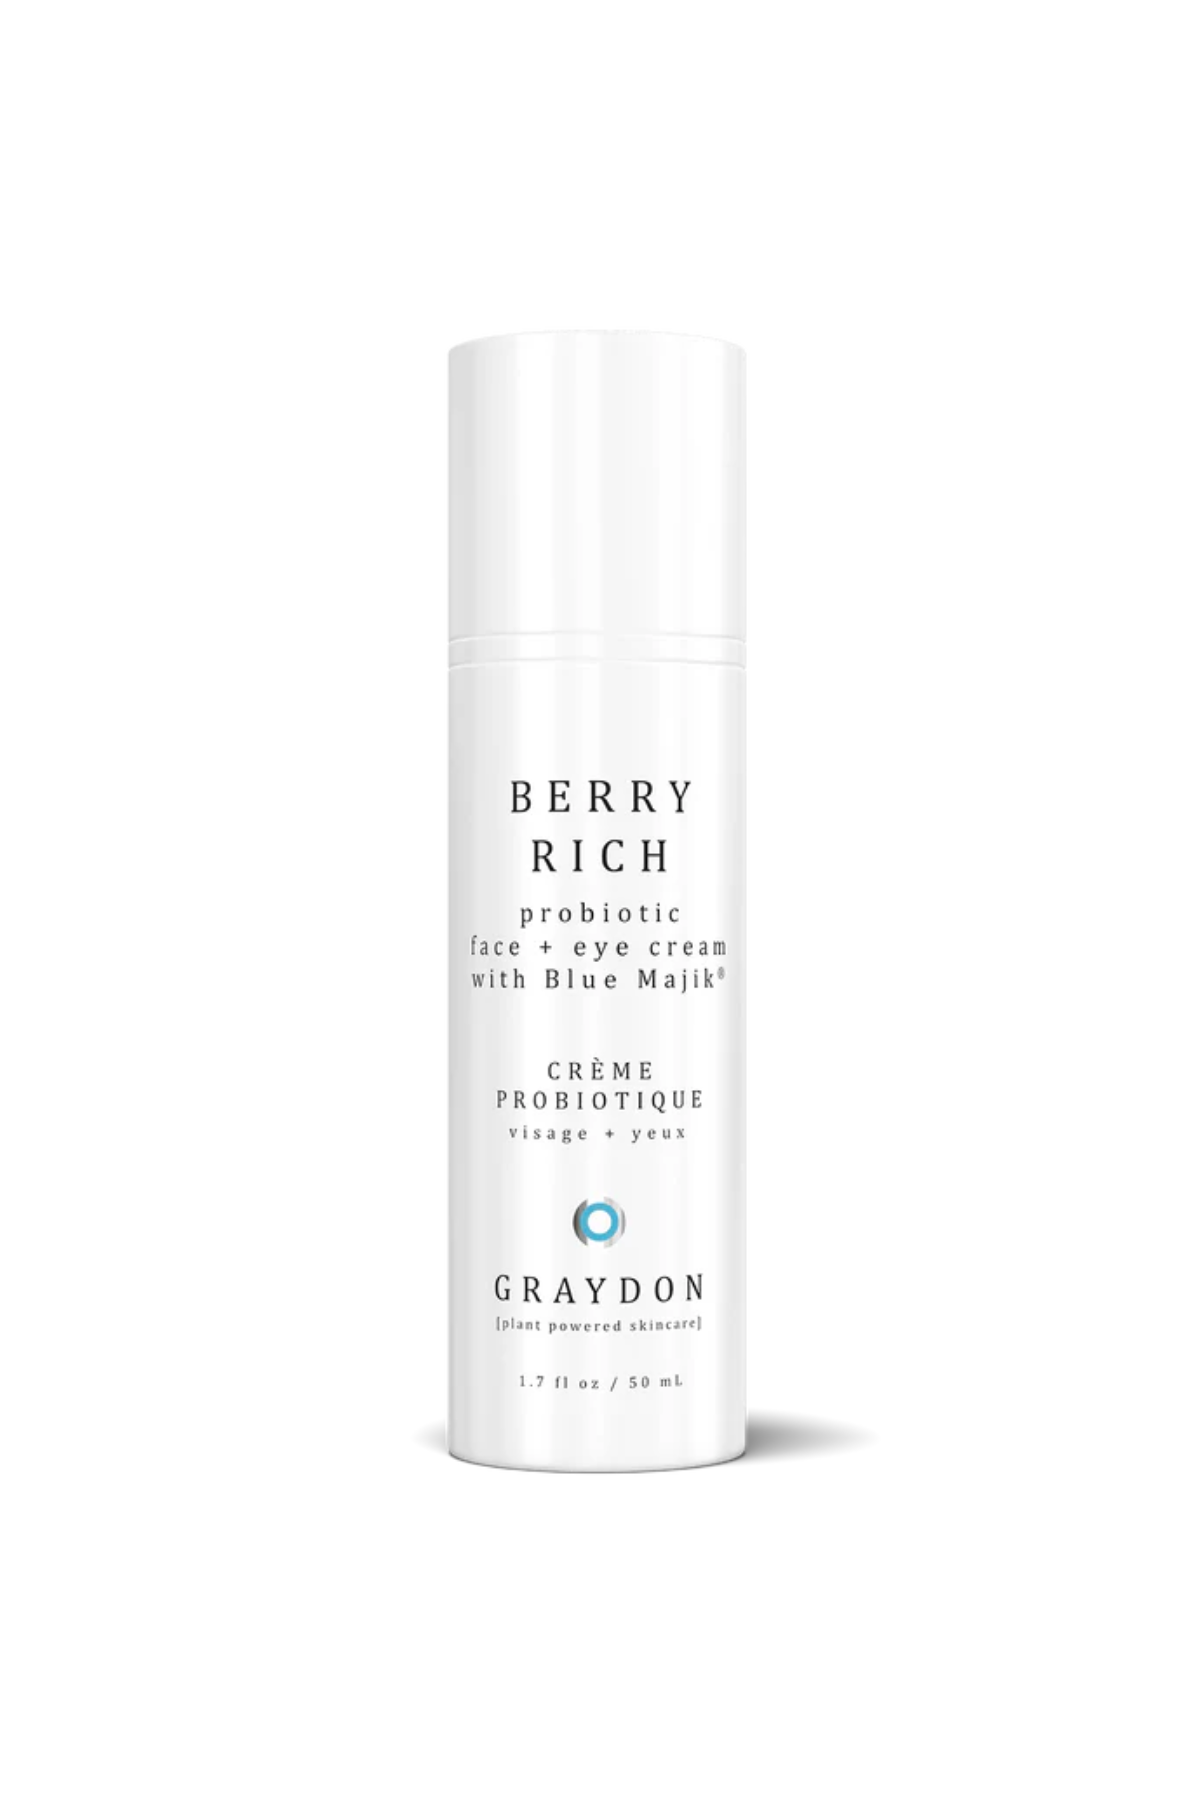 Berry Rich Probiotic Face + Eye Cream